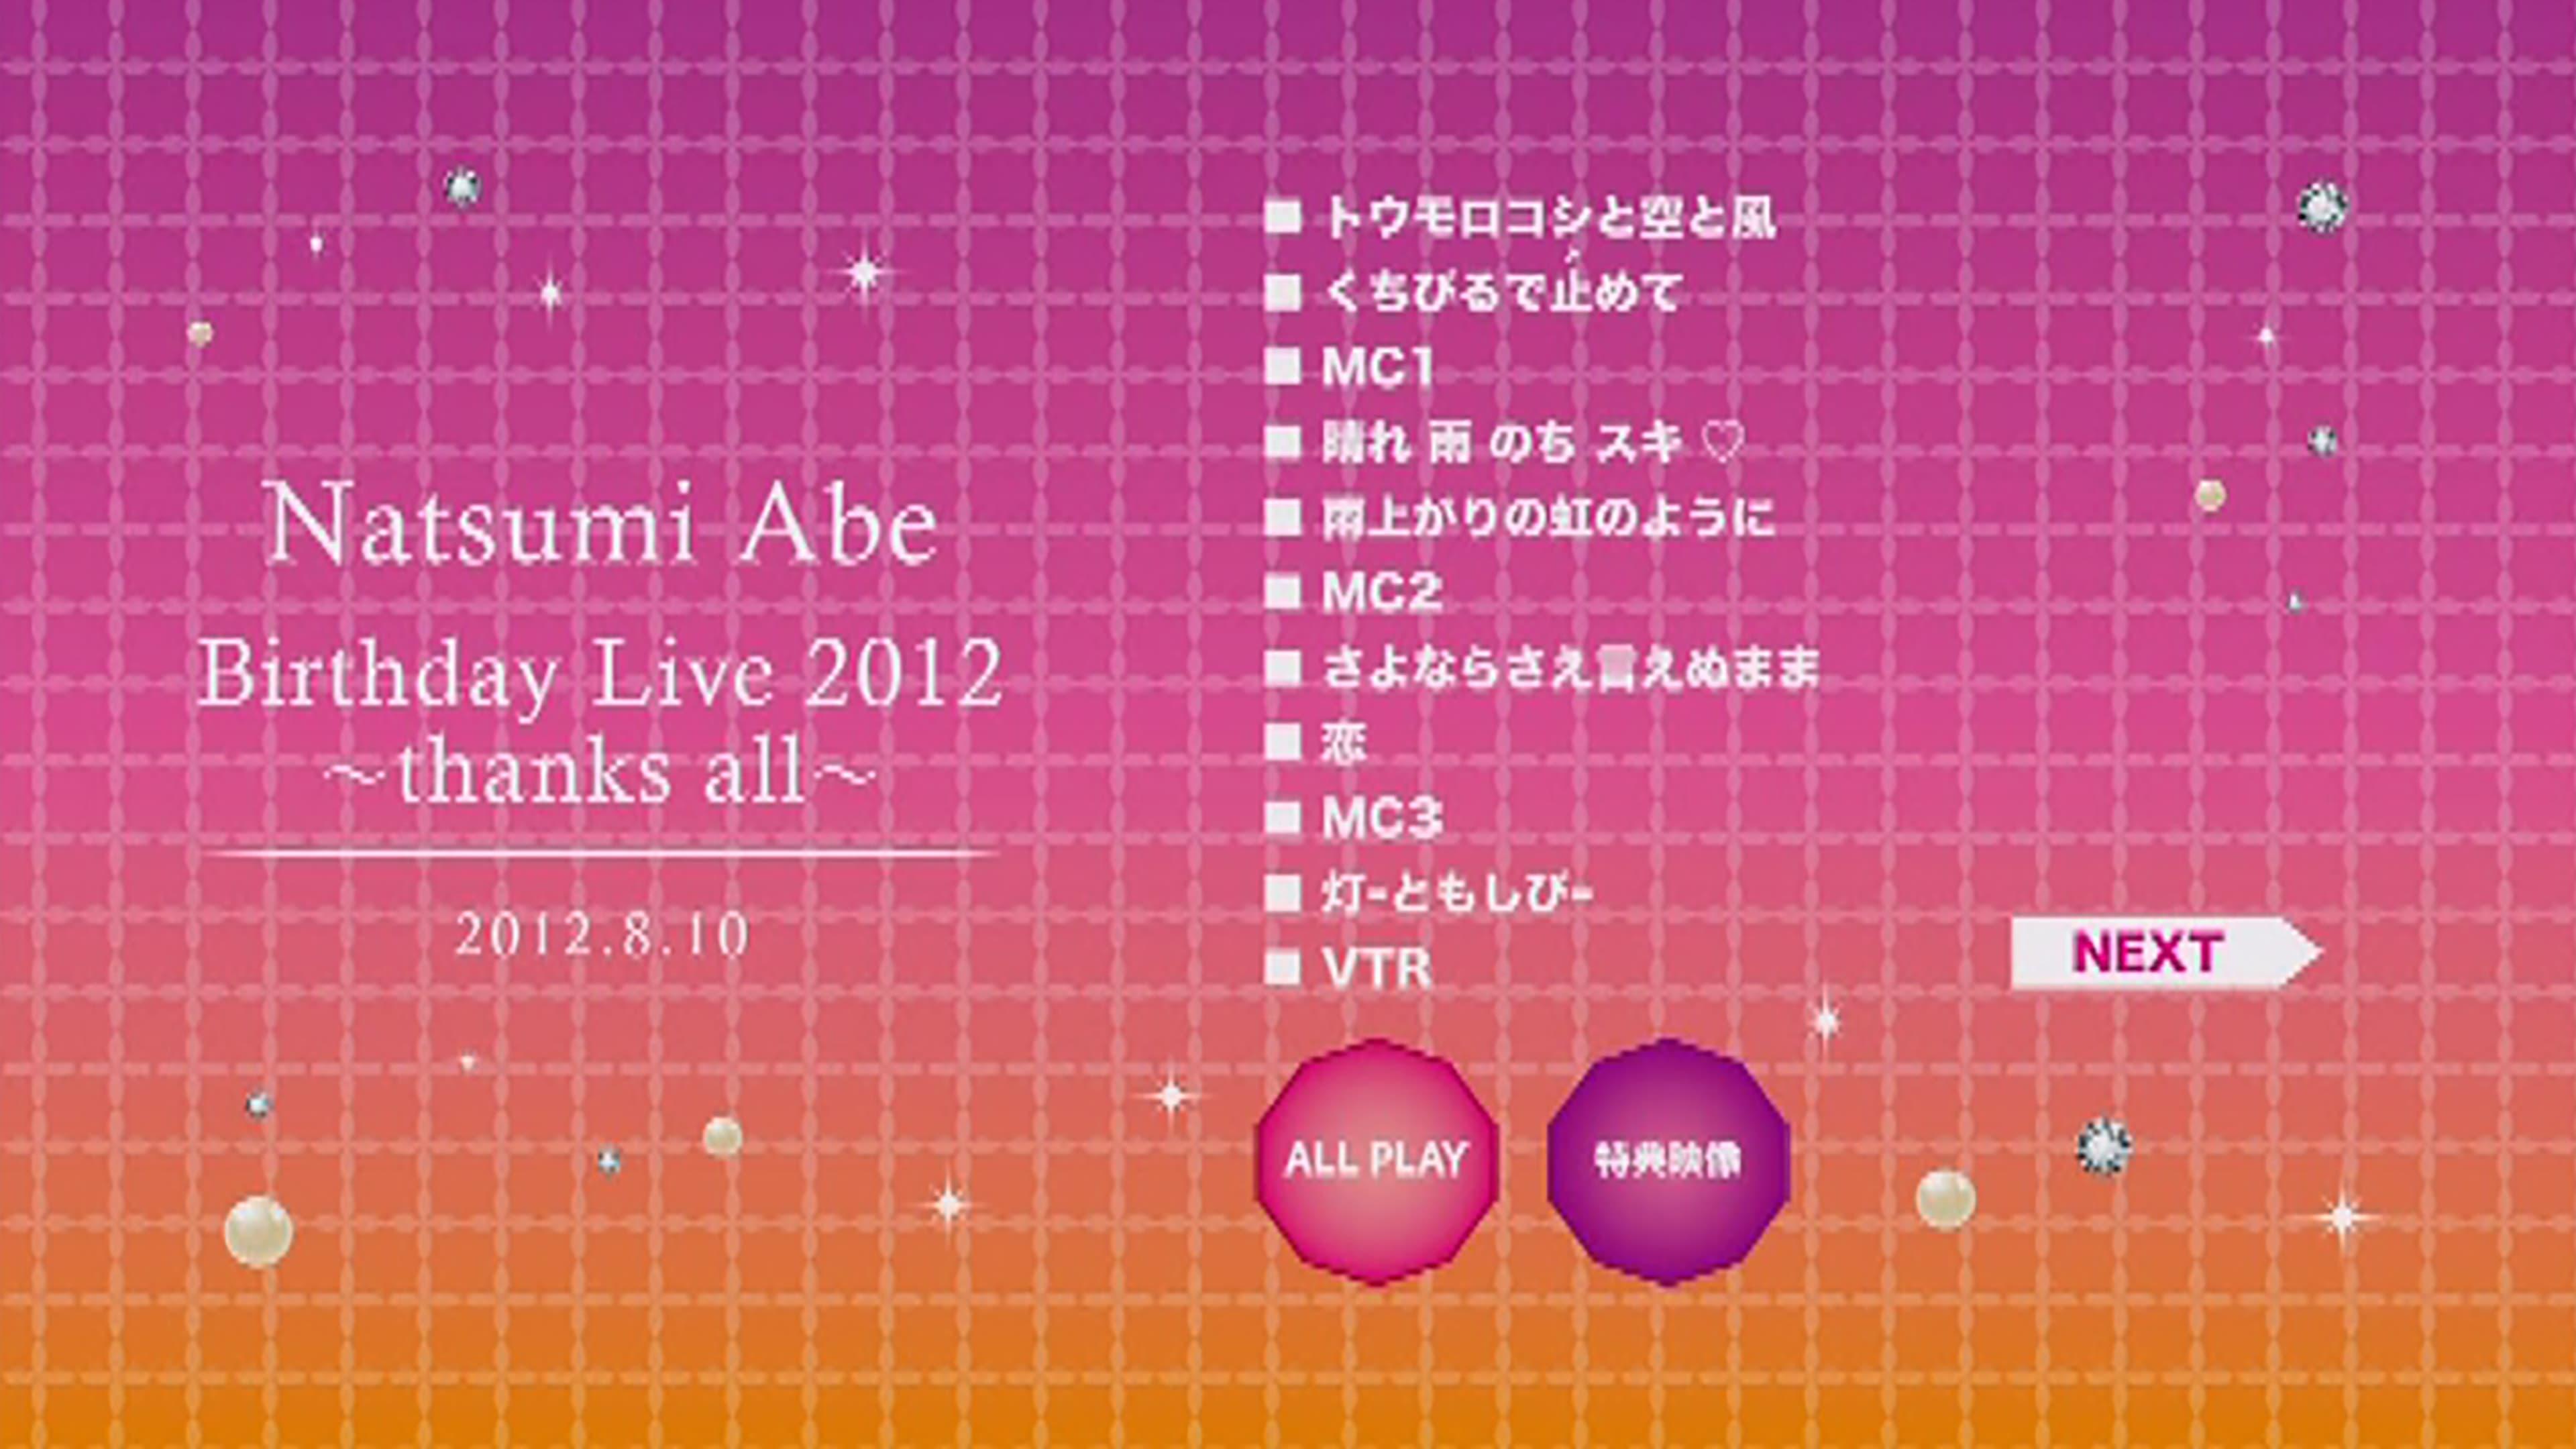 Abe Natsumi 2012 Birthday Live ~thanks all~ backdrop